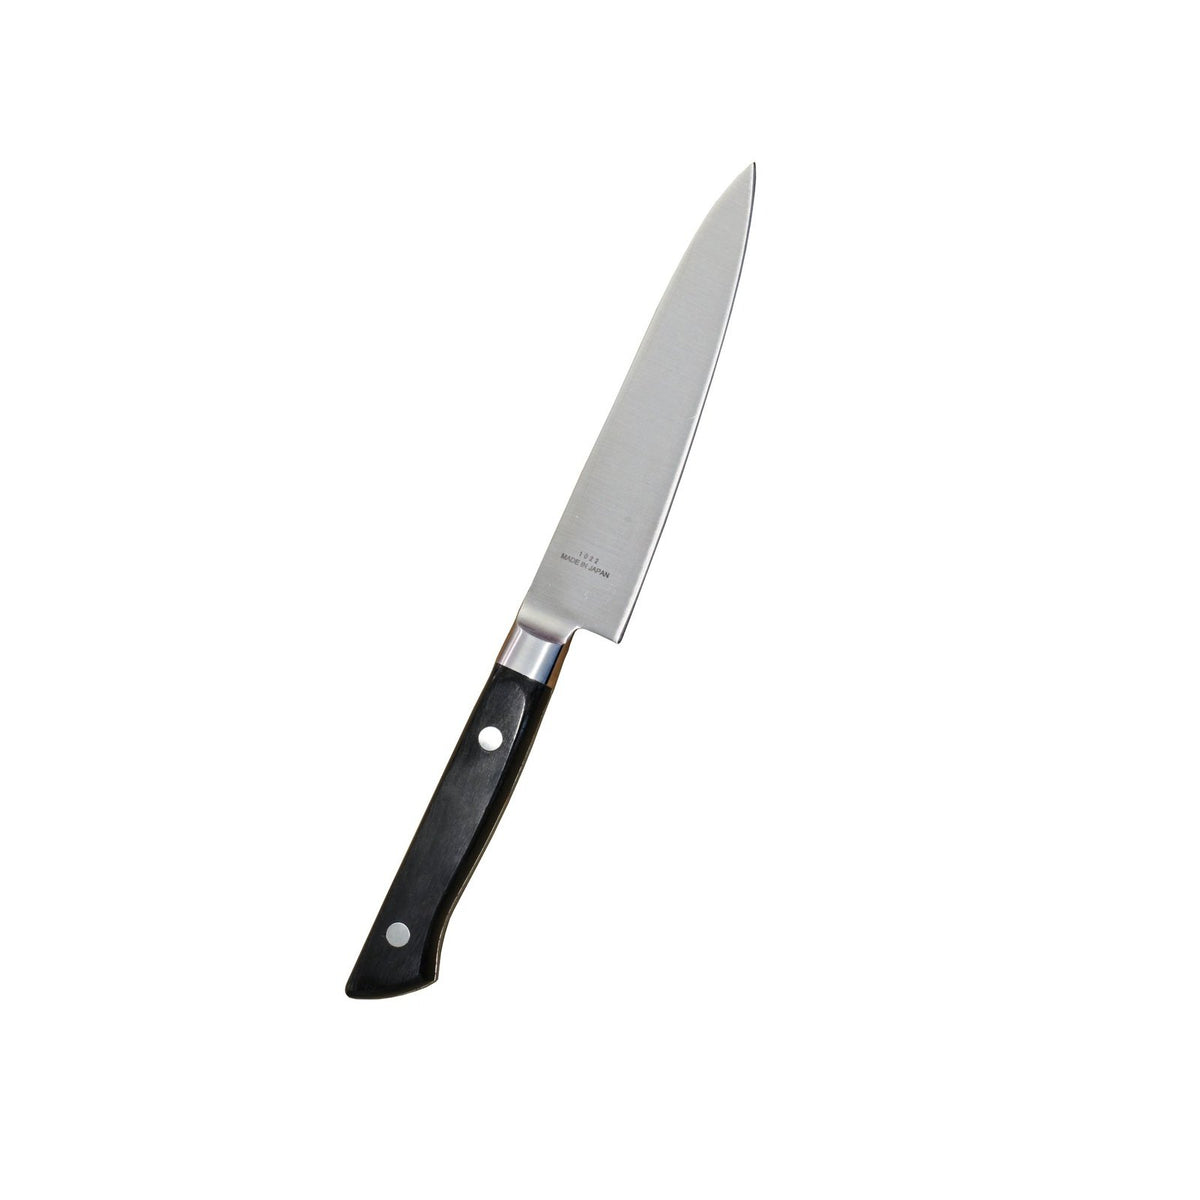 MAC Professional Paring/Utility Knife PKF-50, 12 cm